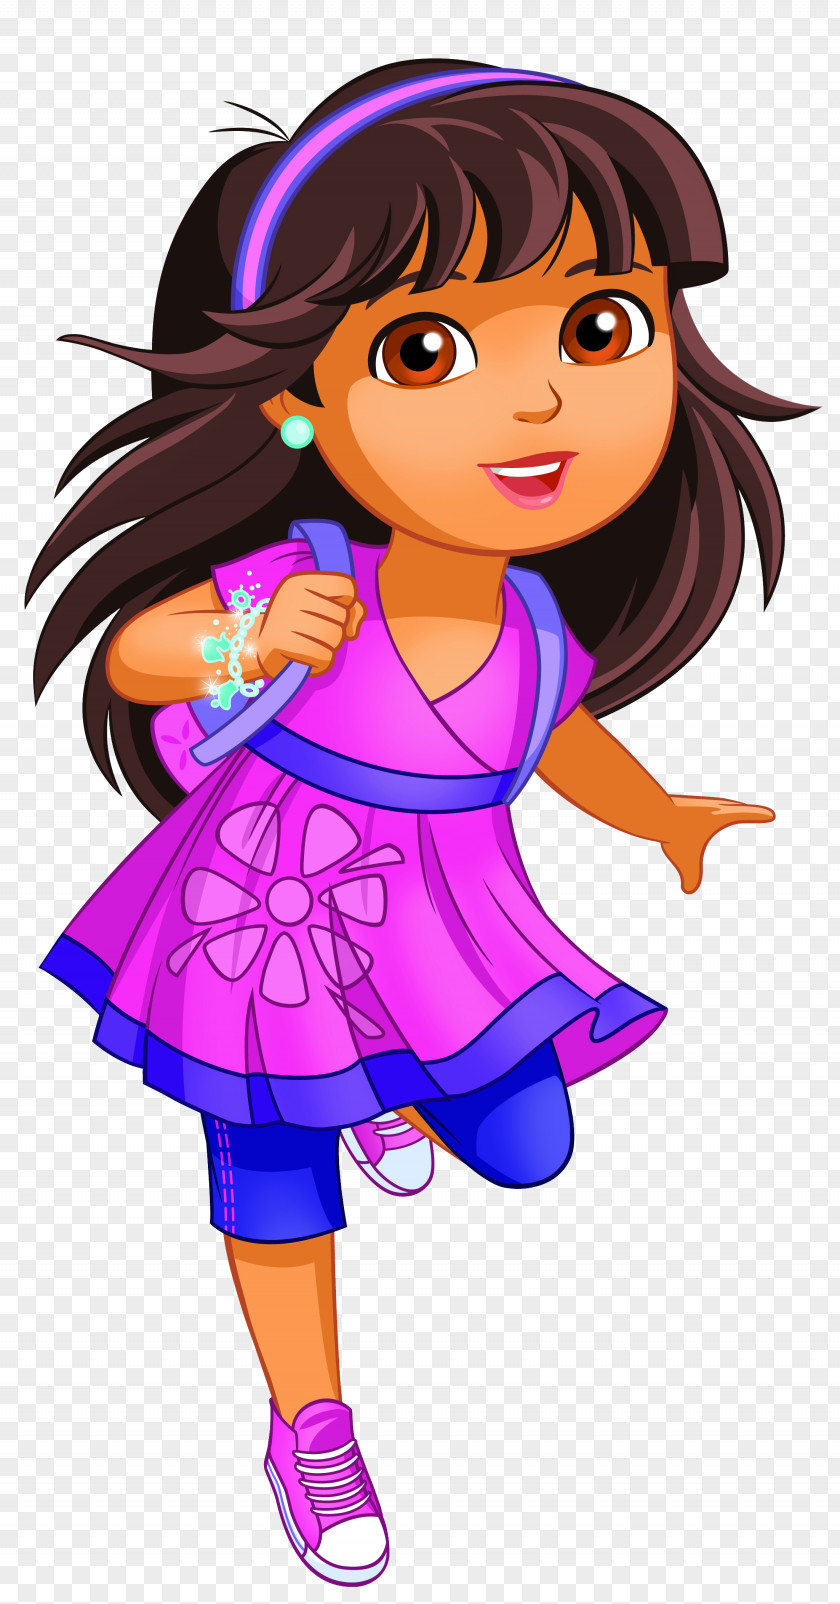 Dora Clip Art Image The Explorer Nick Jr. Nickelodeon Cartoon PNG